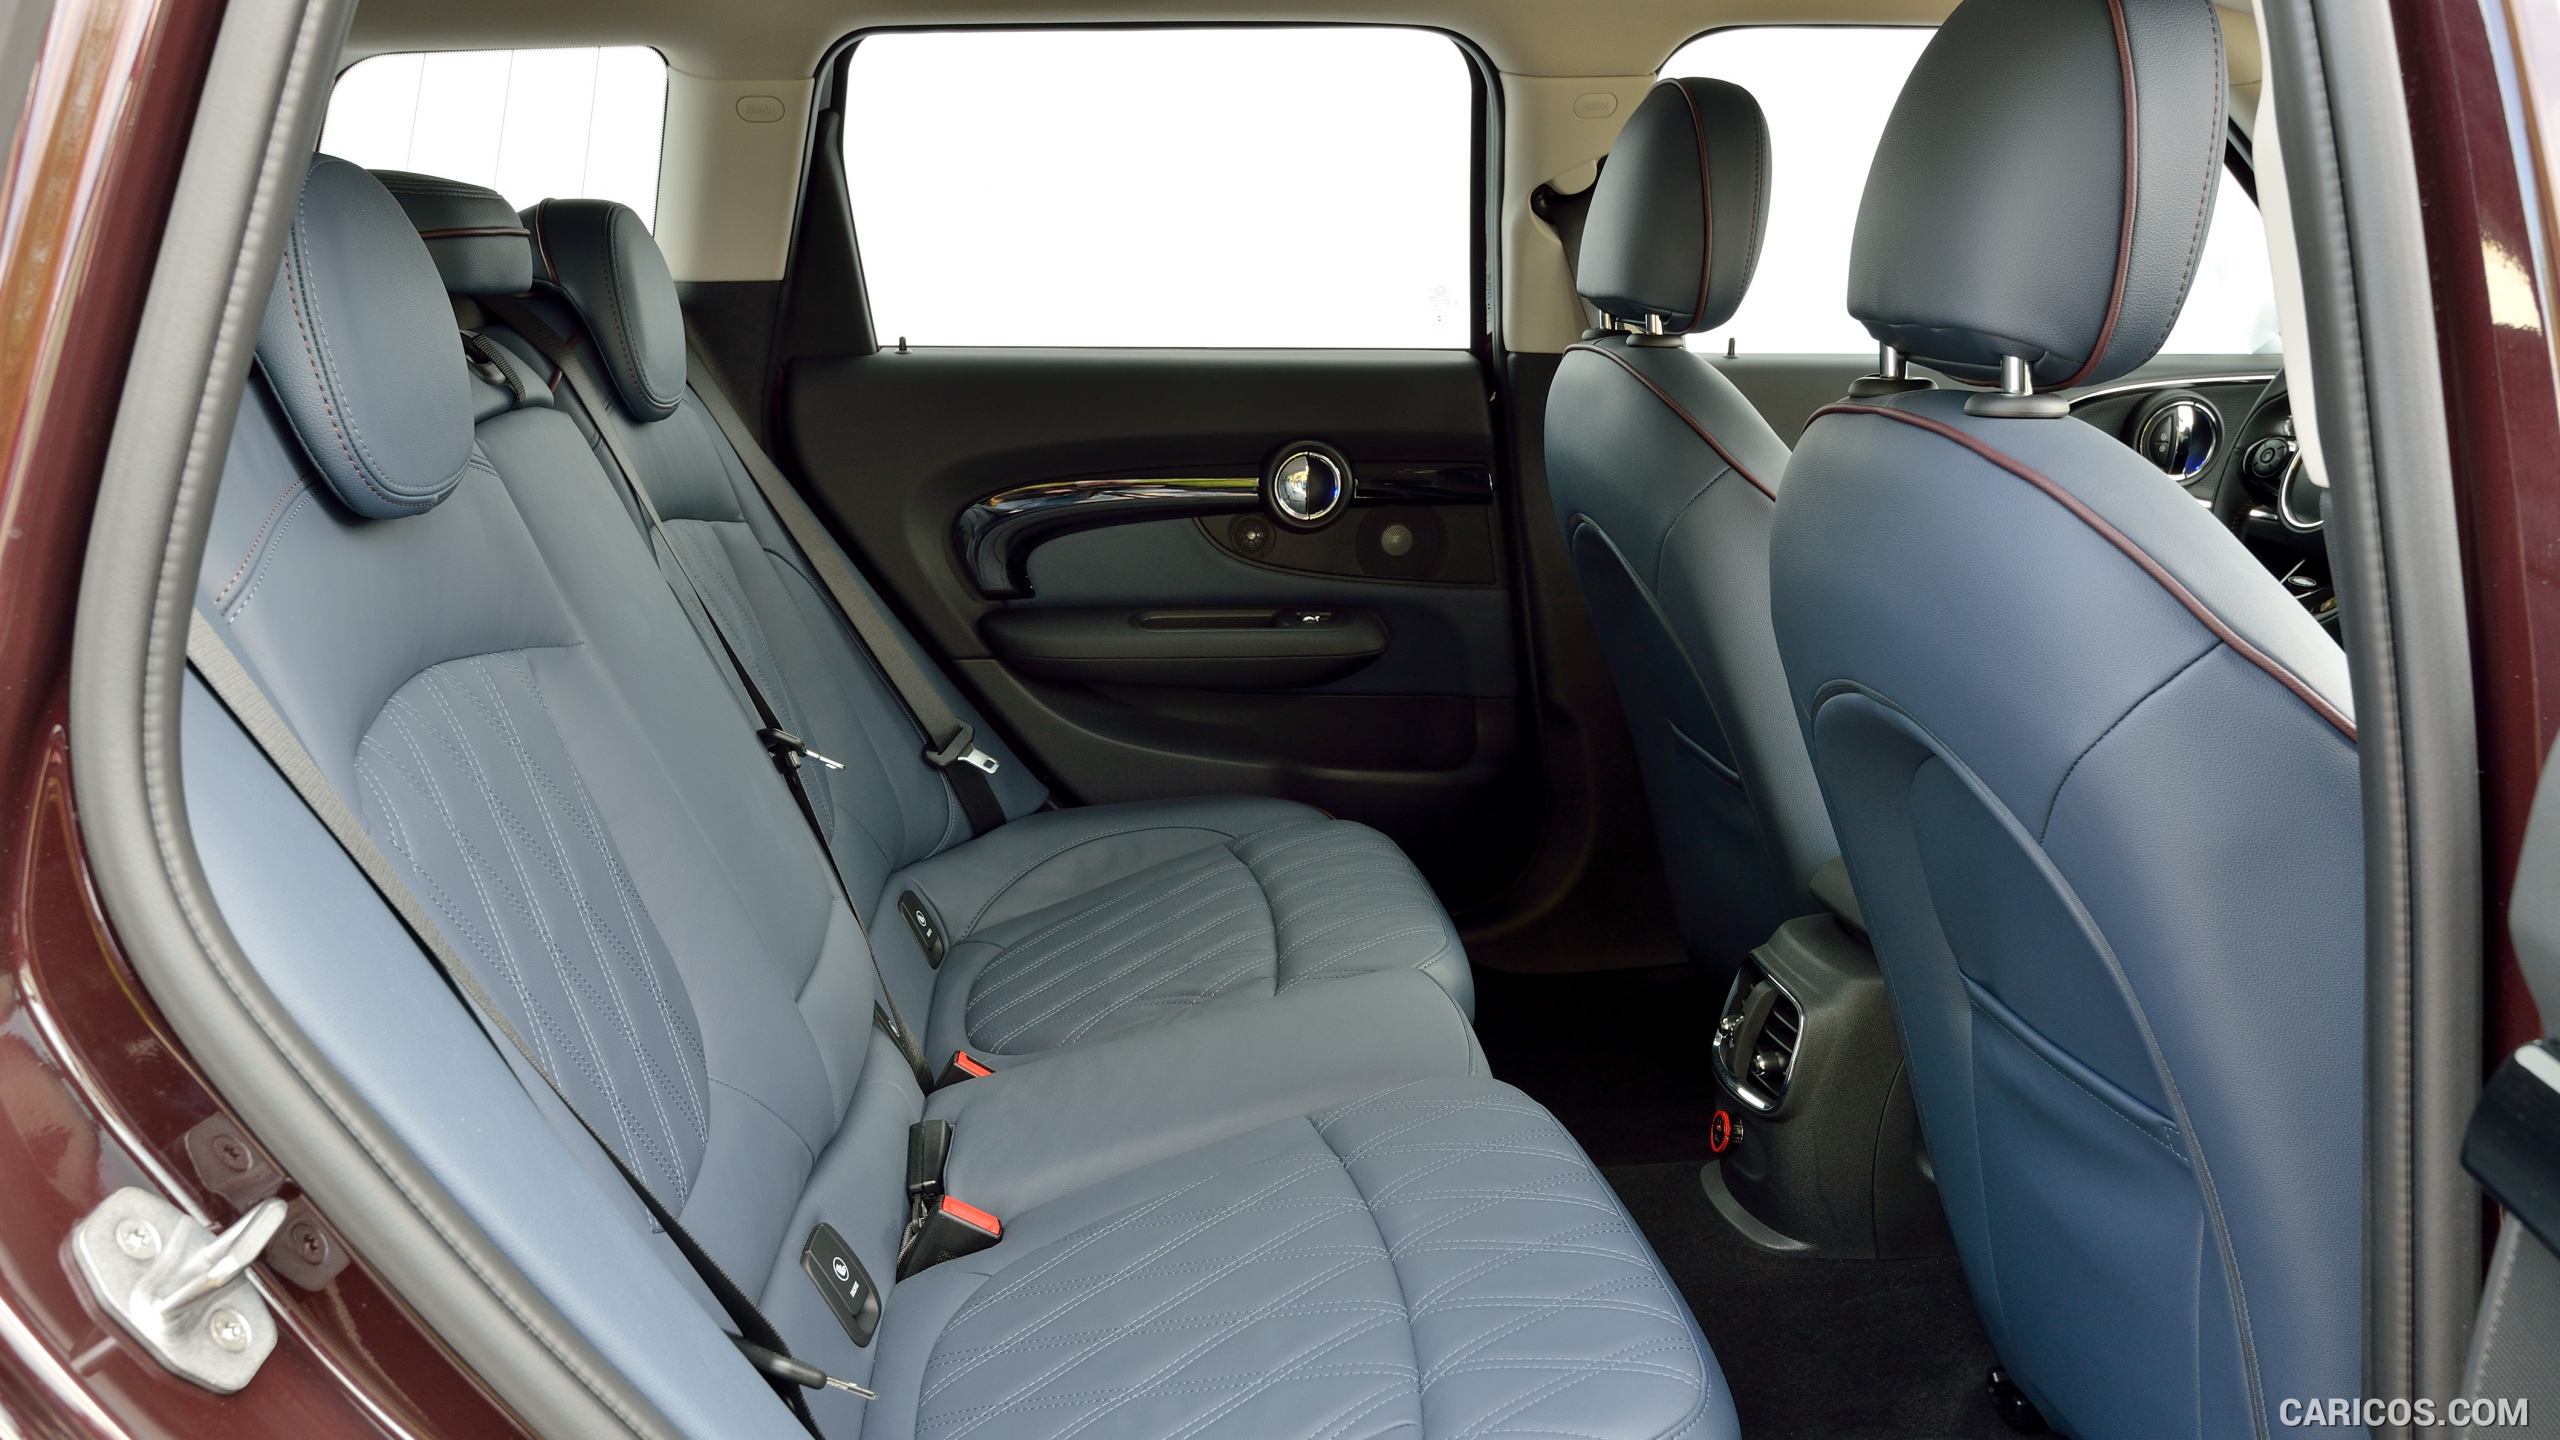 2016 MINI Cooper S Clubman in Metallic Pure Burgundy - Interior, Rear Seats, #376 of 380